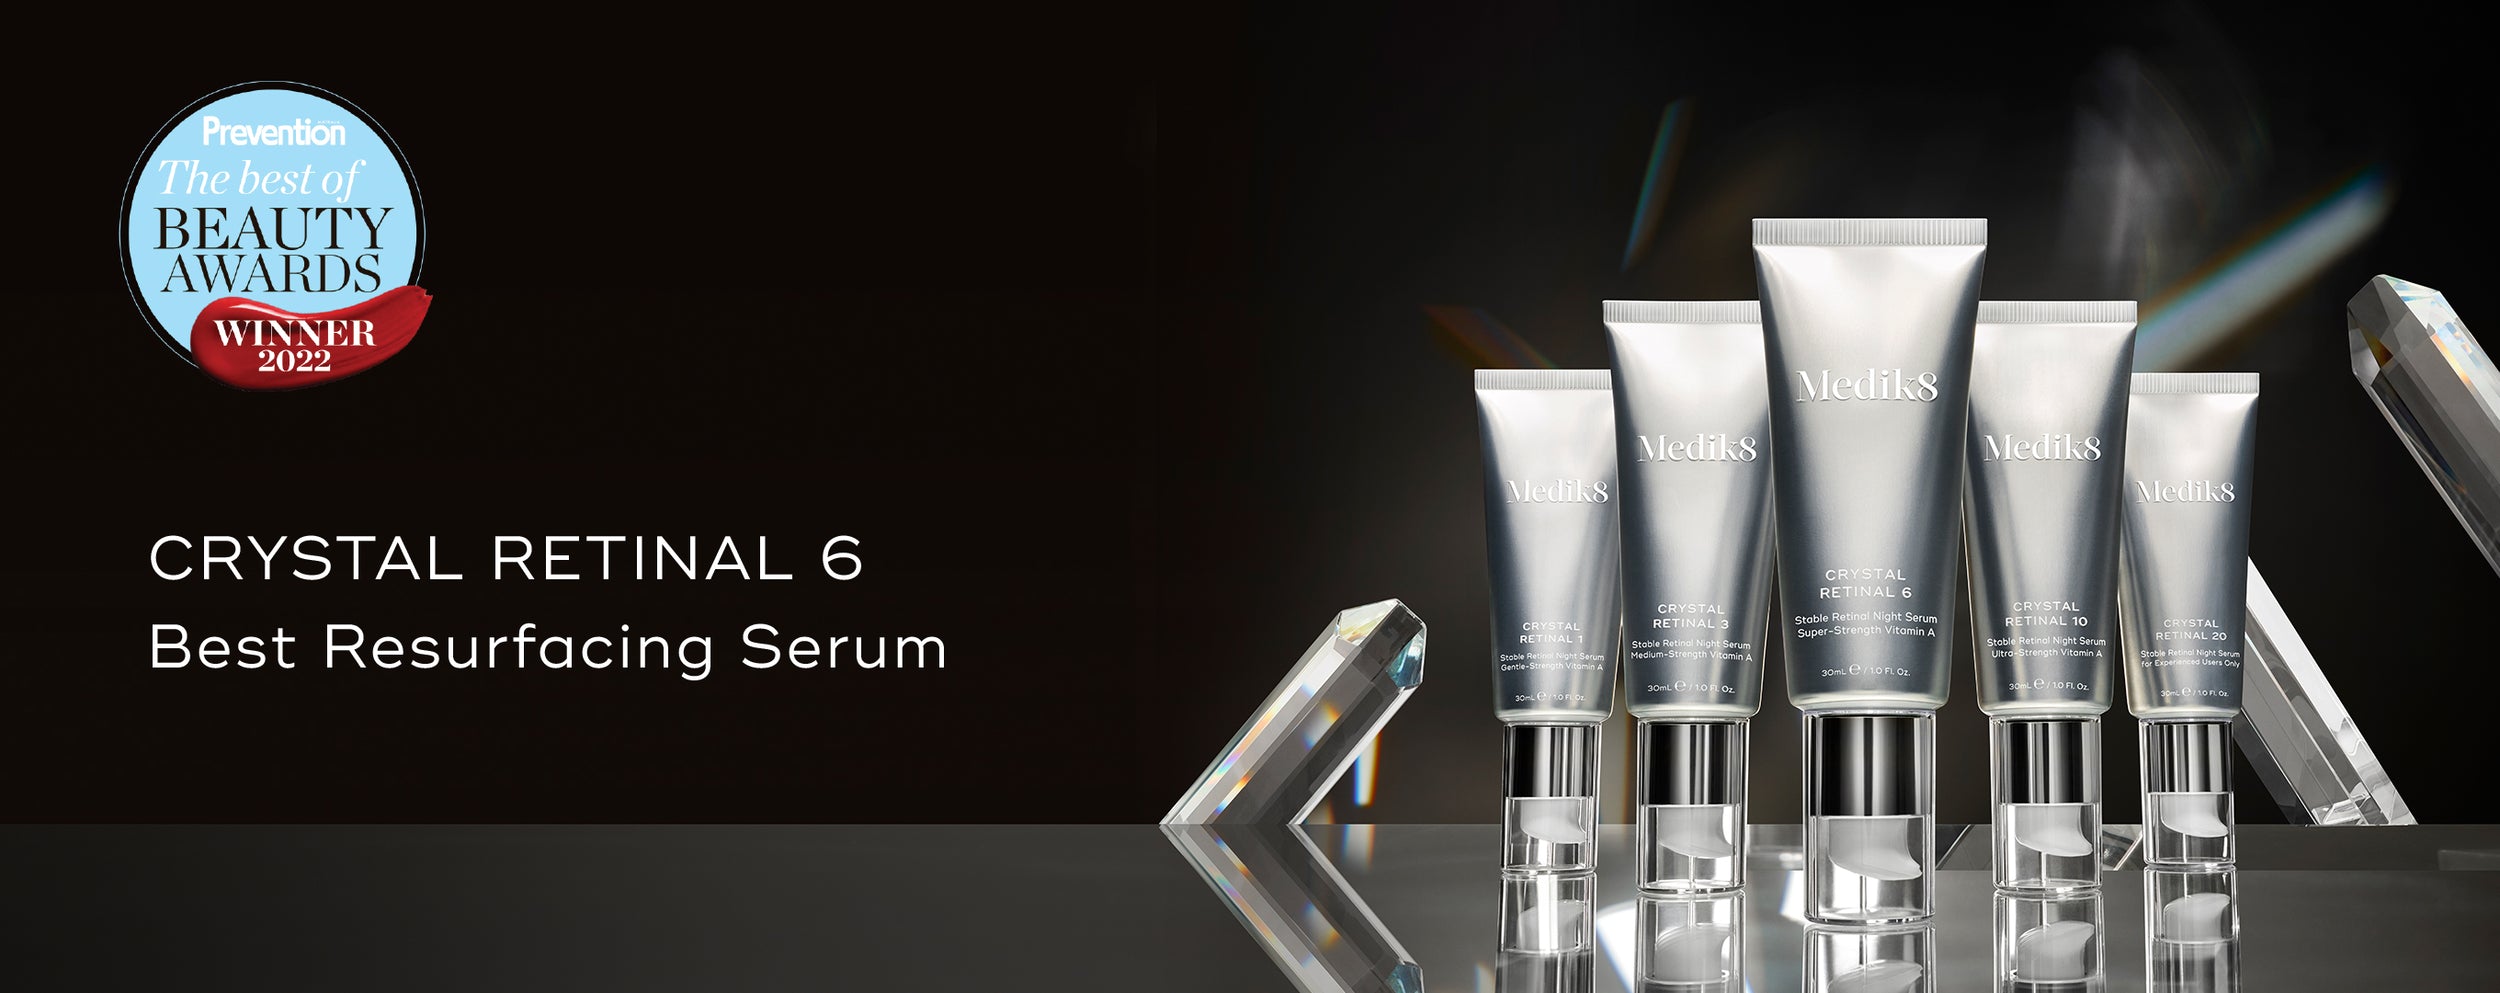 Prevention Best of Beauty Award Winner 2022 – Best Resurfacing Retinol Serum